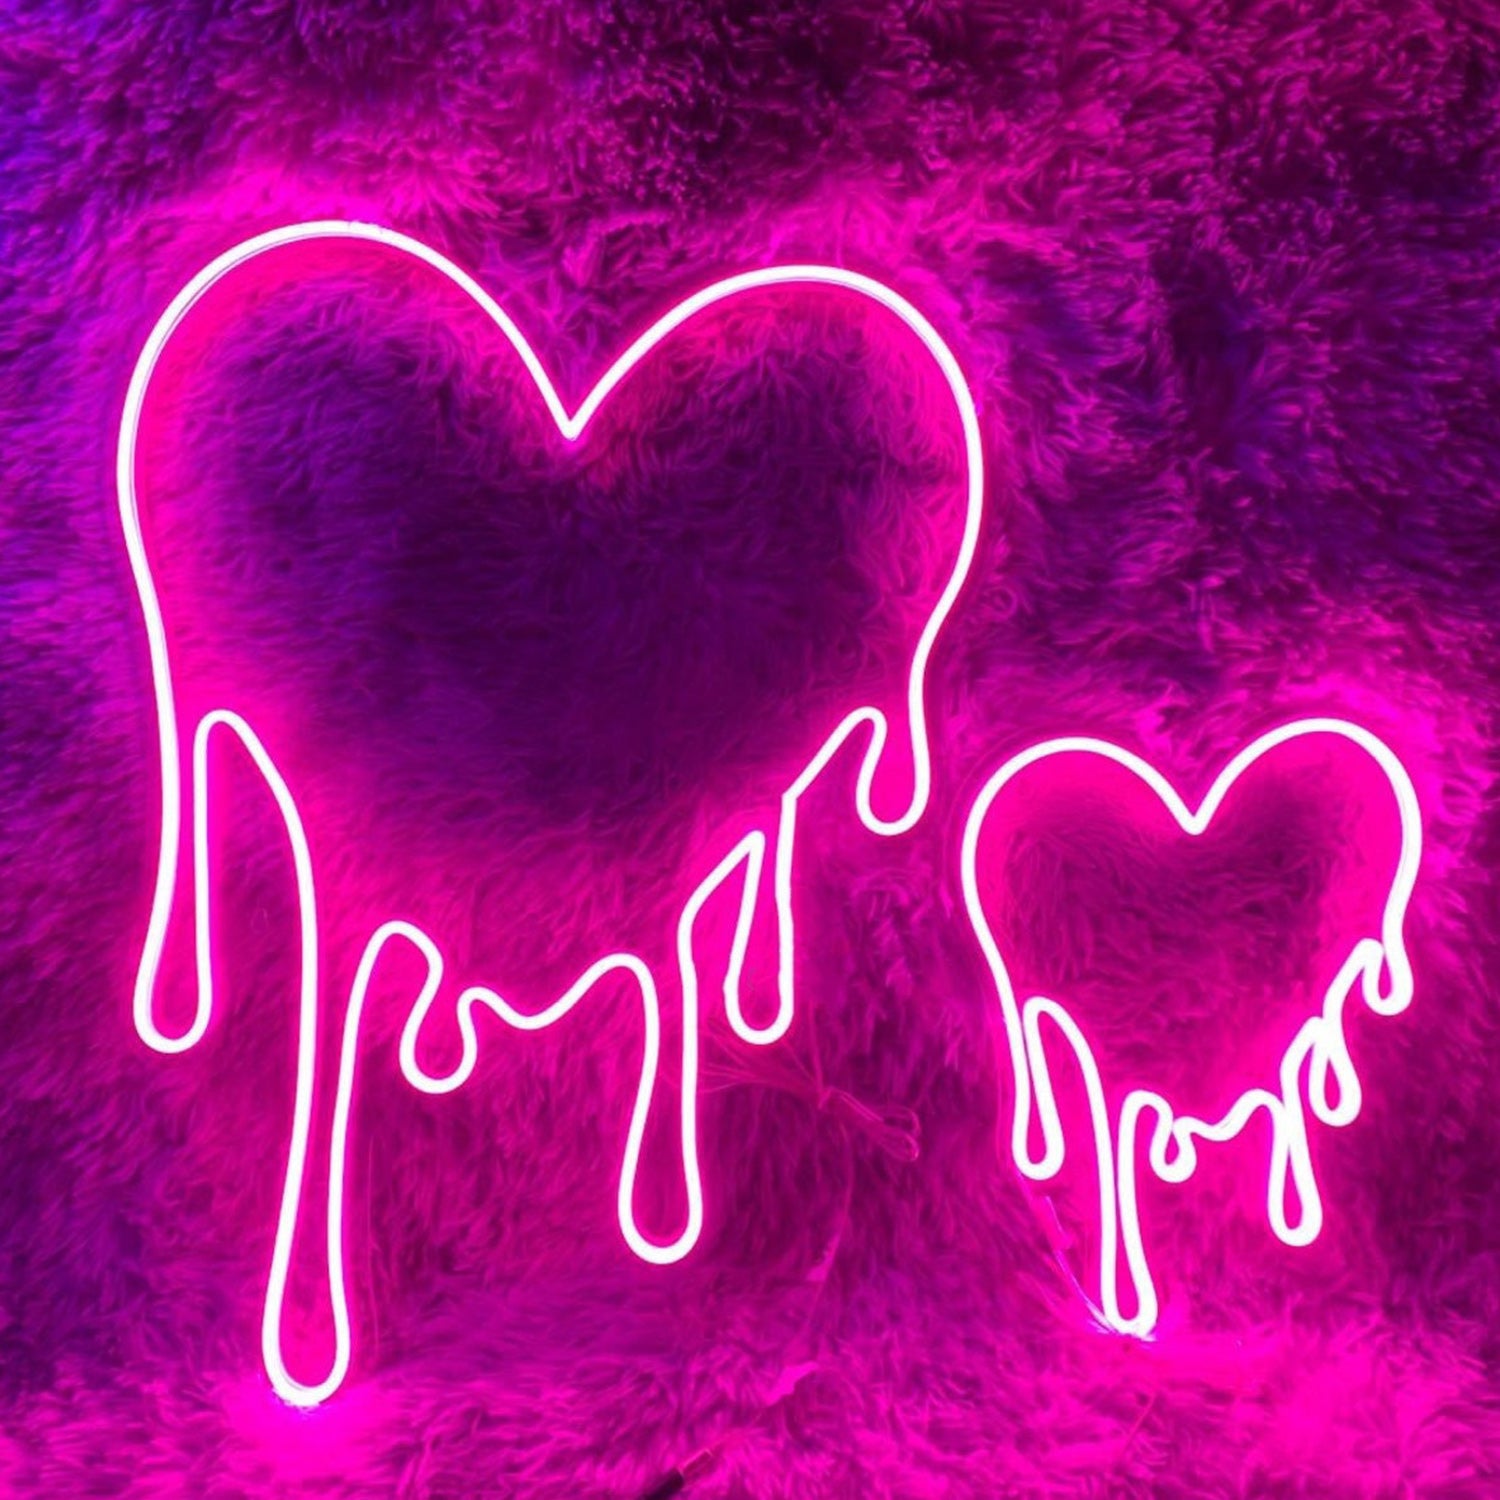 NEONIP-100% Handmade Halloween Dripping Heart Neon Sign Halloween Scary Decor